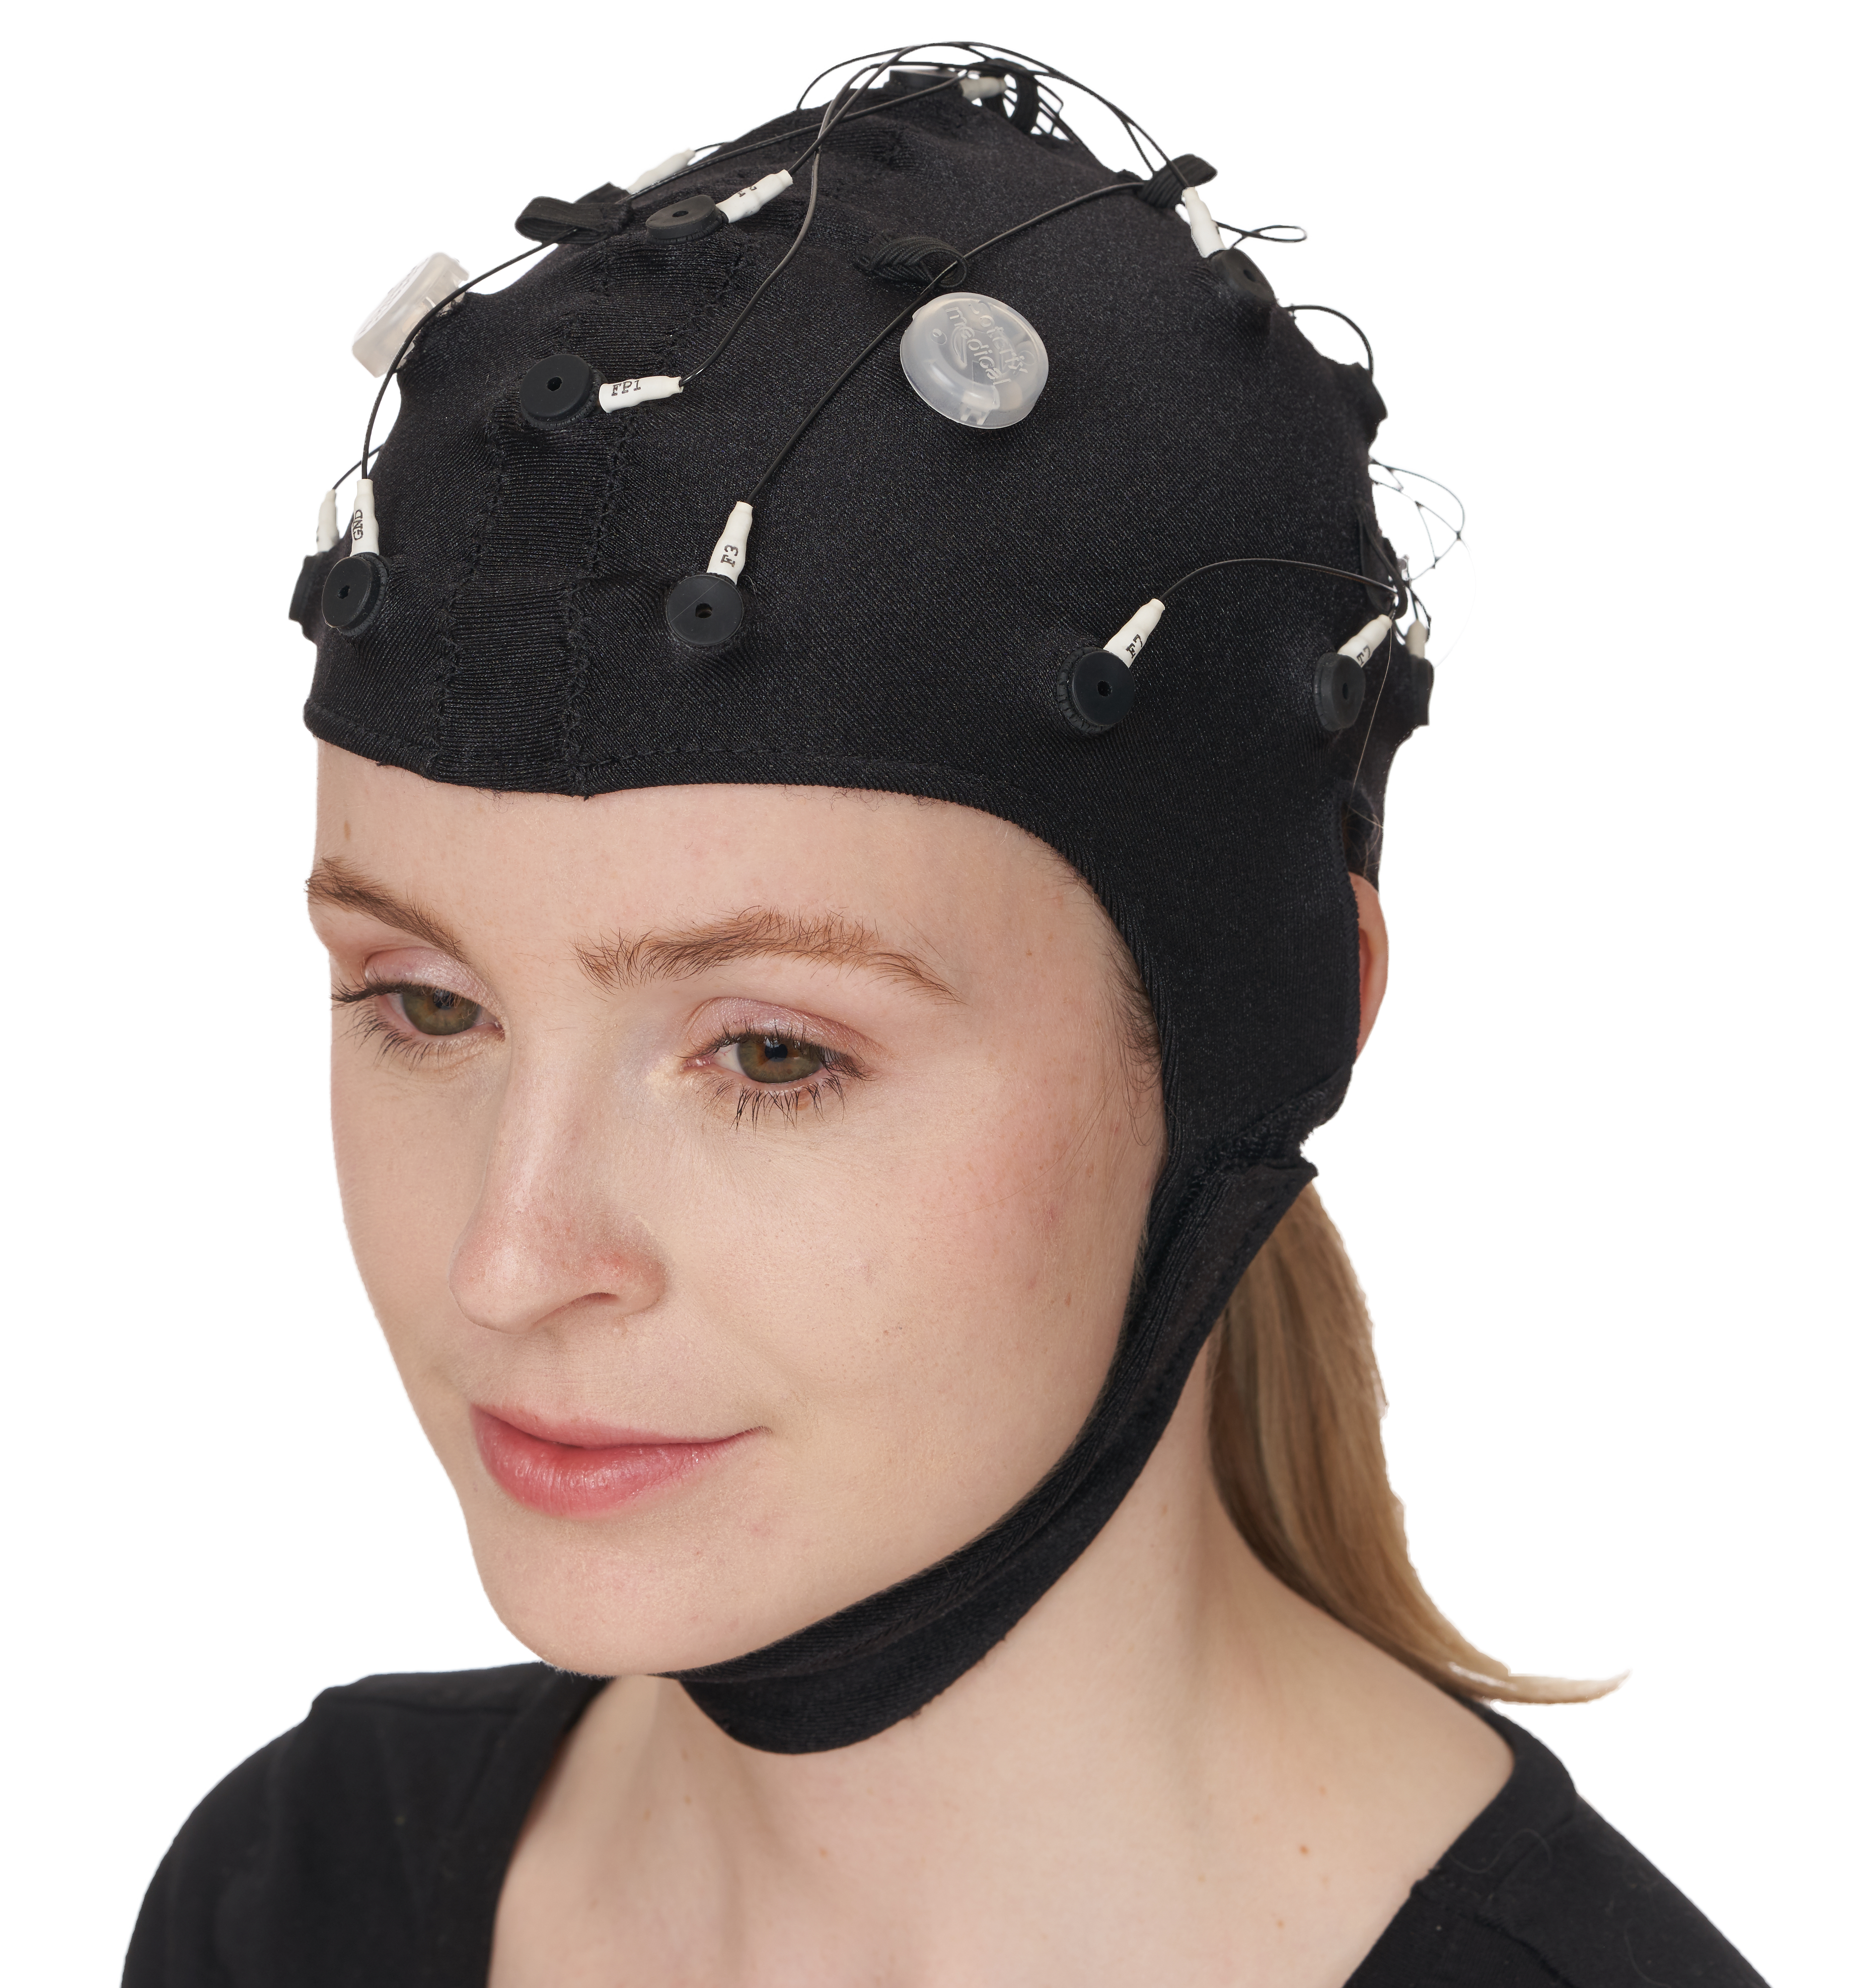 Neuroscan EEG cap with Soterix Medical Holders